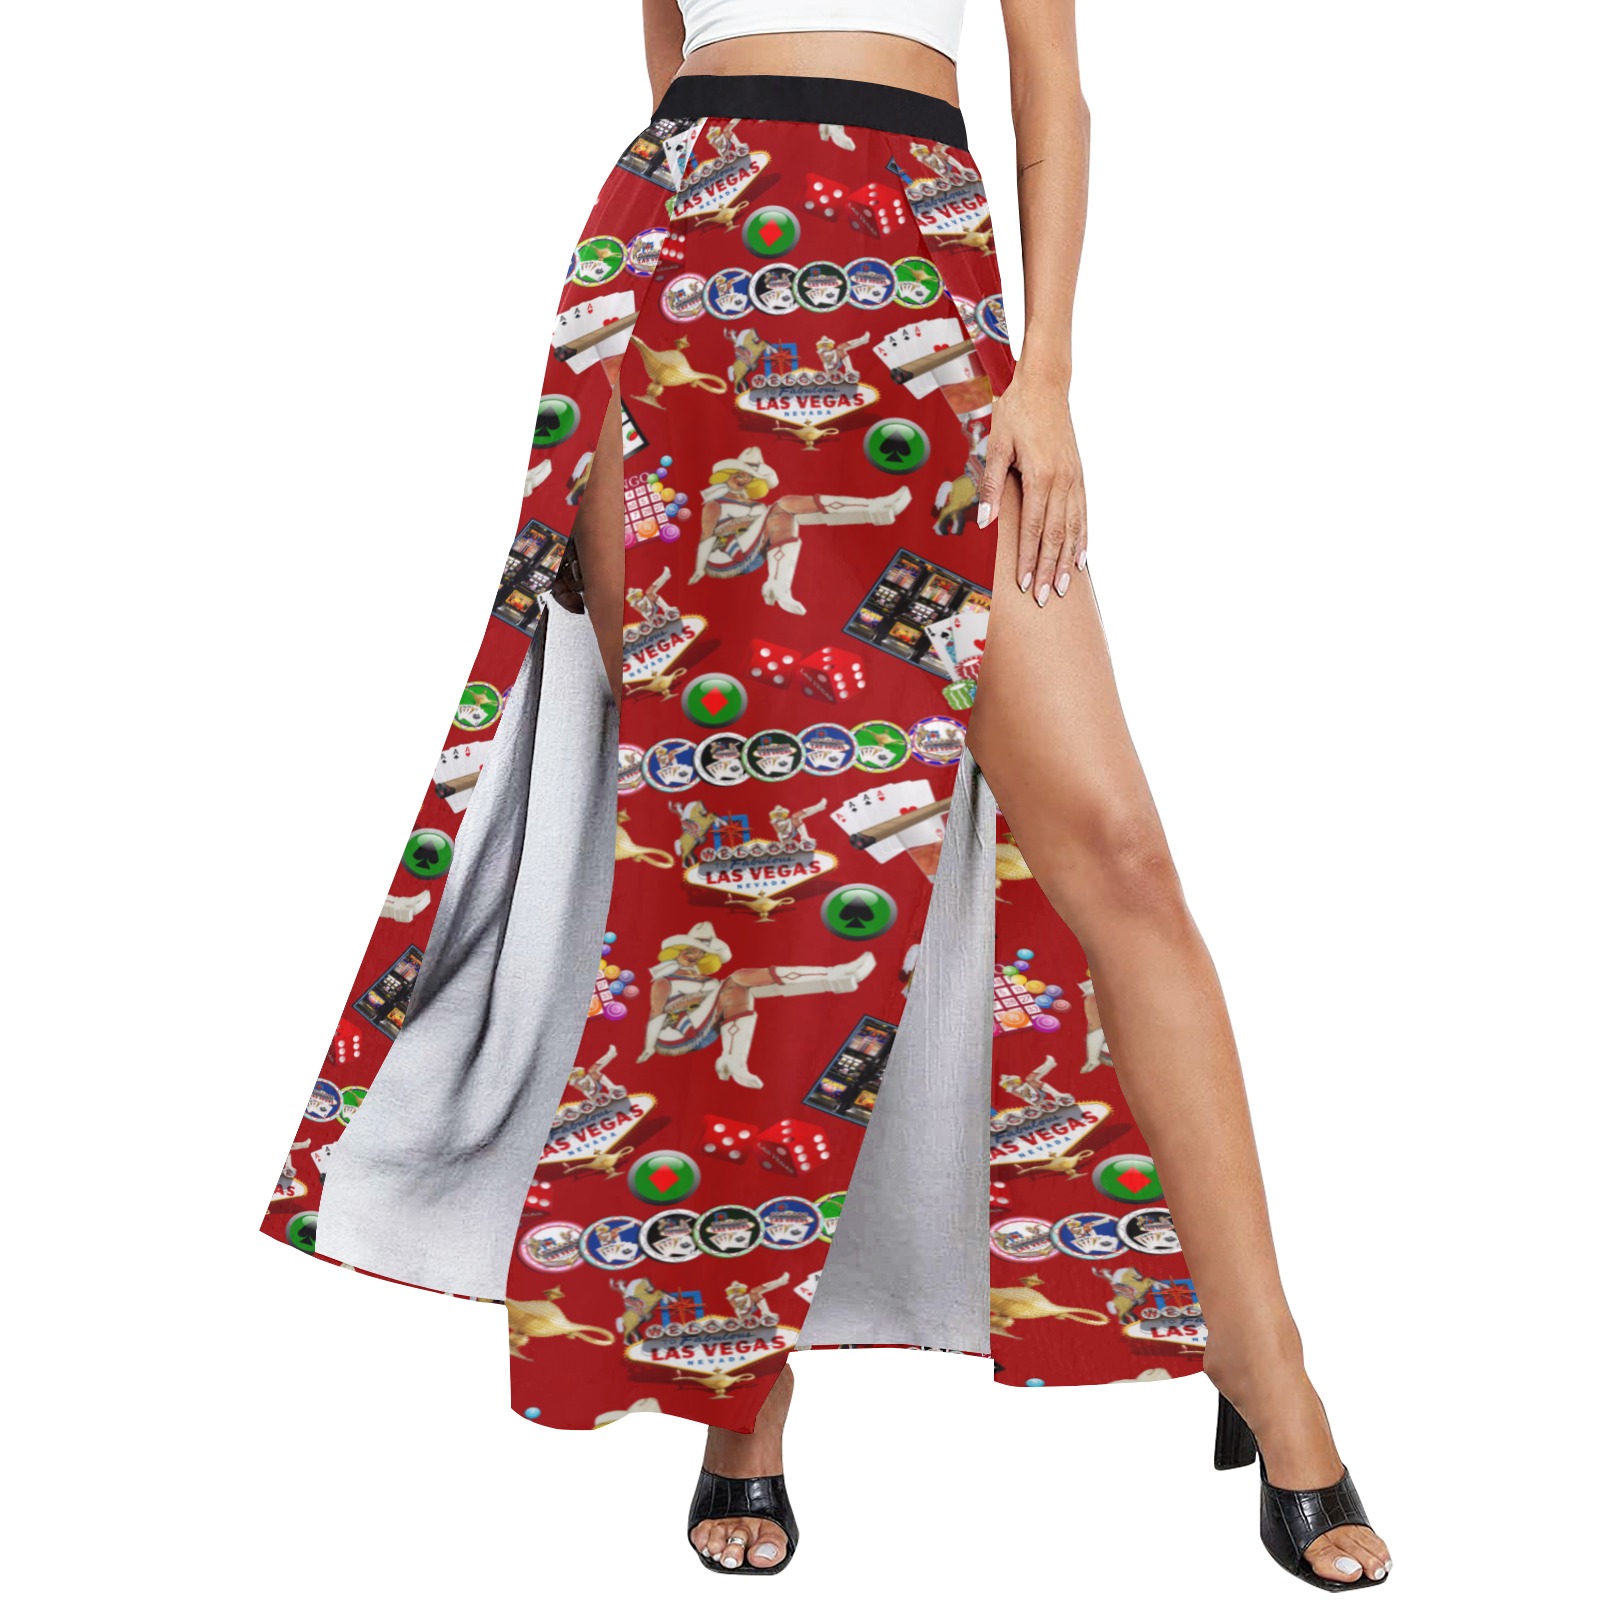 Las Vegas Gamblers Delight - Red High Slit Long Beach Dress (Model S40)